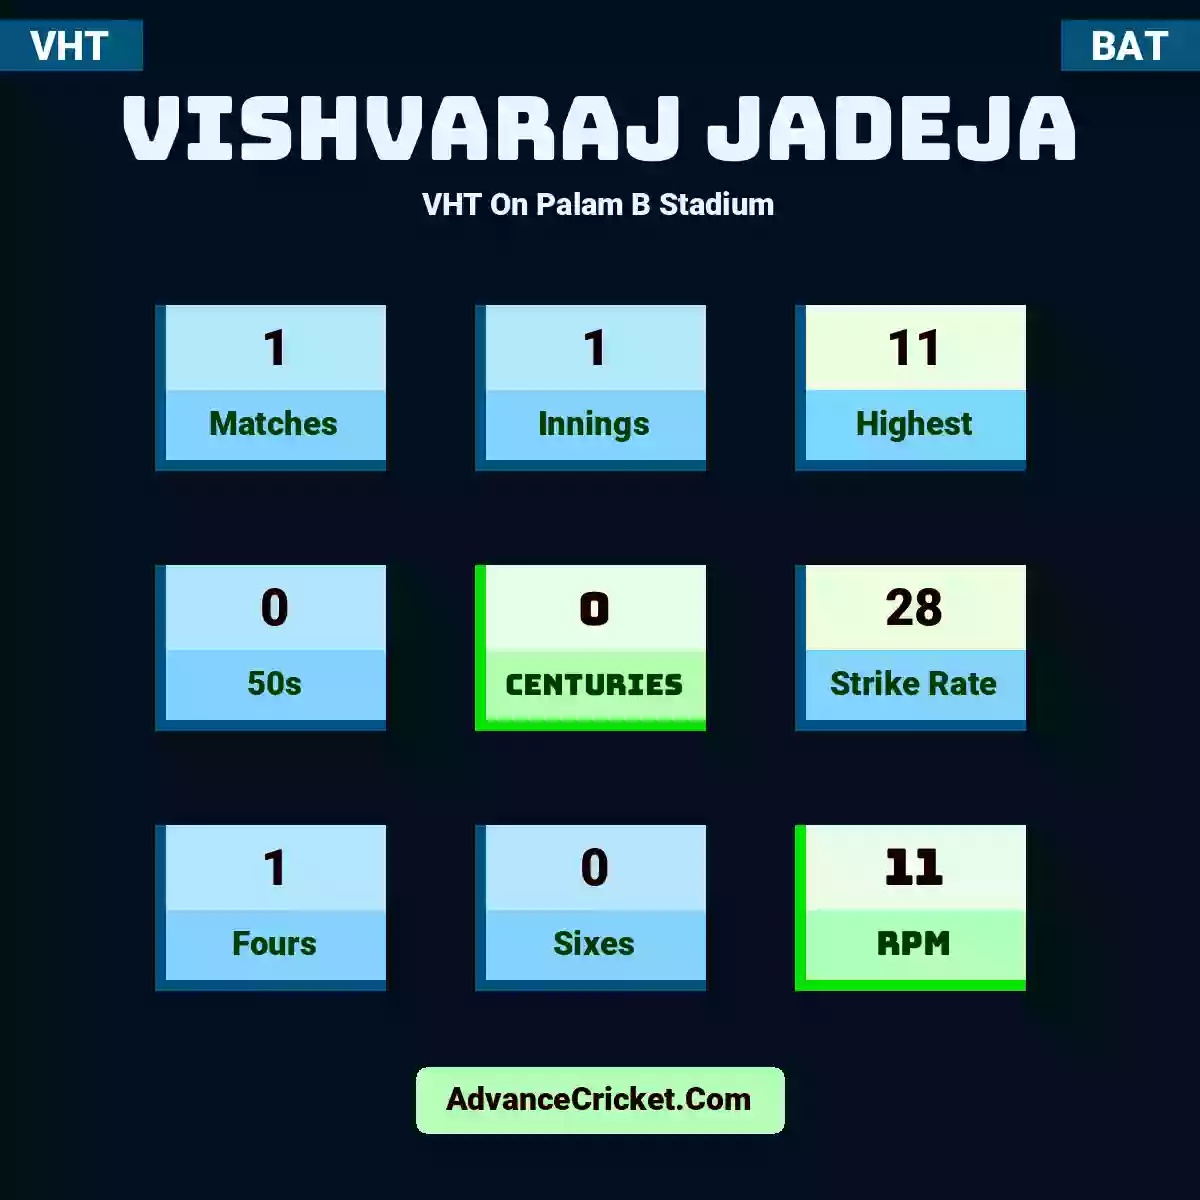 Vishvaraj Jadeja VHT  On Palam B Stadium, Vishvaraj Jadeja played 1 matches, scored 11 runs as highest, 0 half-centuries, and 0 centuries, with a strike rate of 28. V.Jadeja hit 1 fours and 0 sixes, with an RPM of 11.